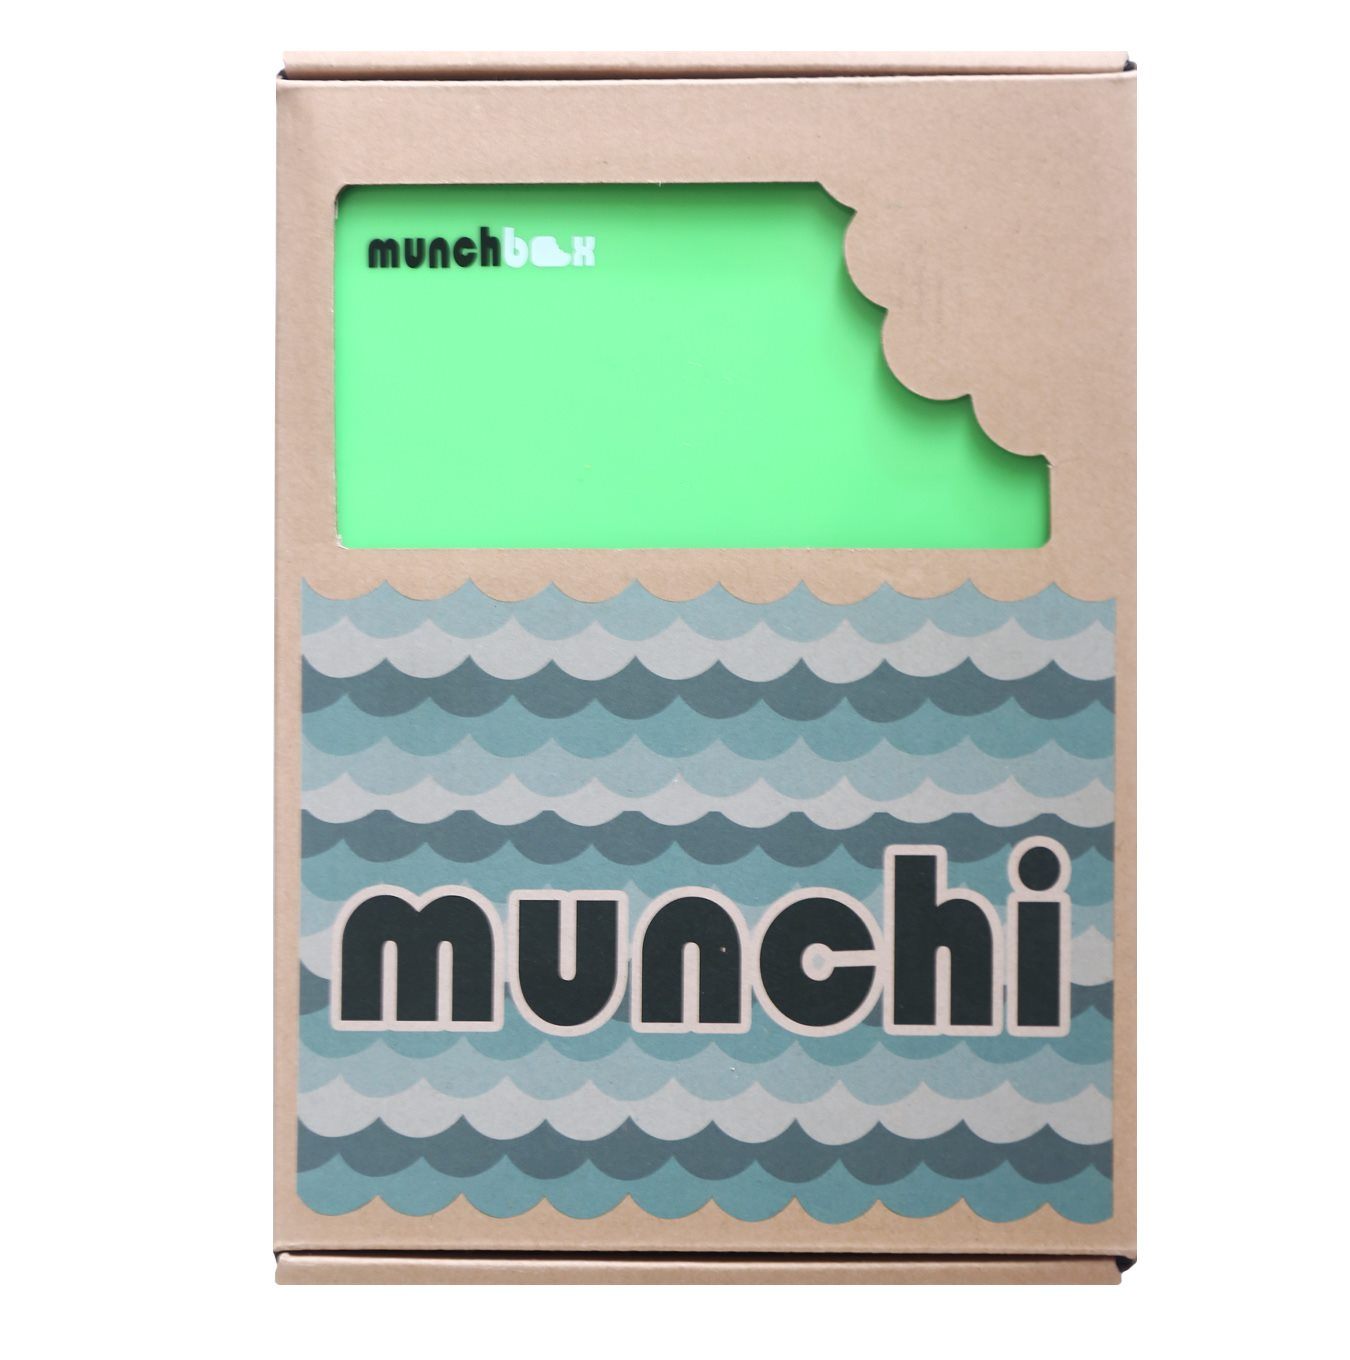 Munchbox Munchi Snack - Pink Sunset Feeding Munchbox 